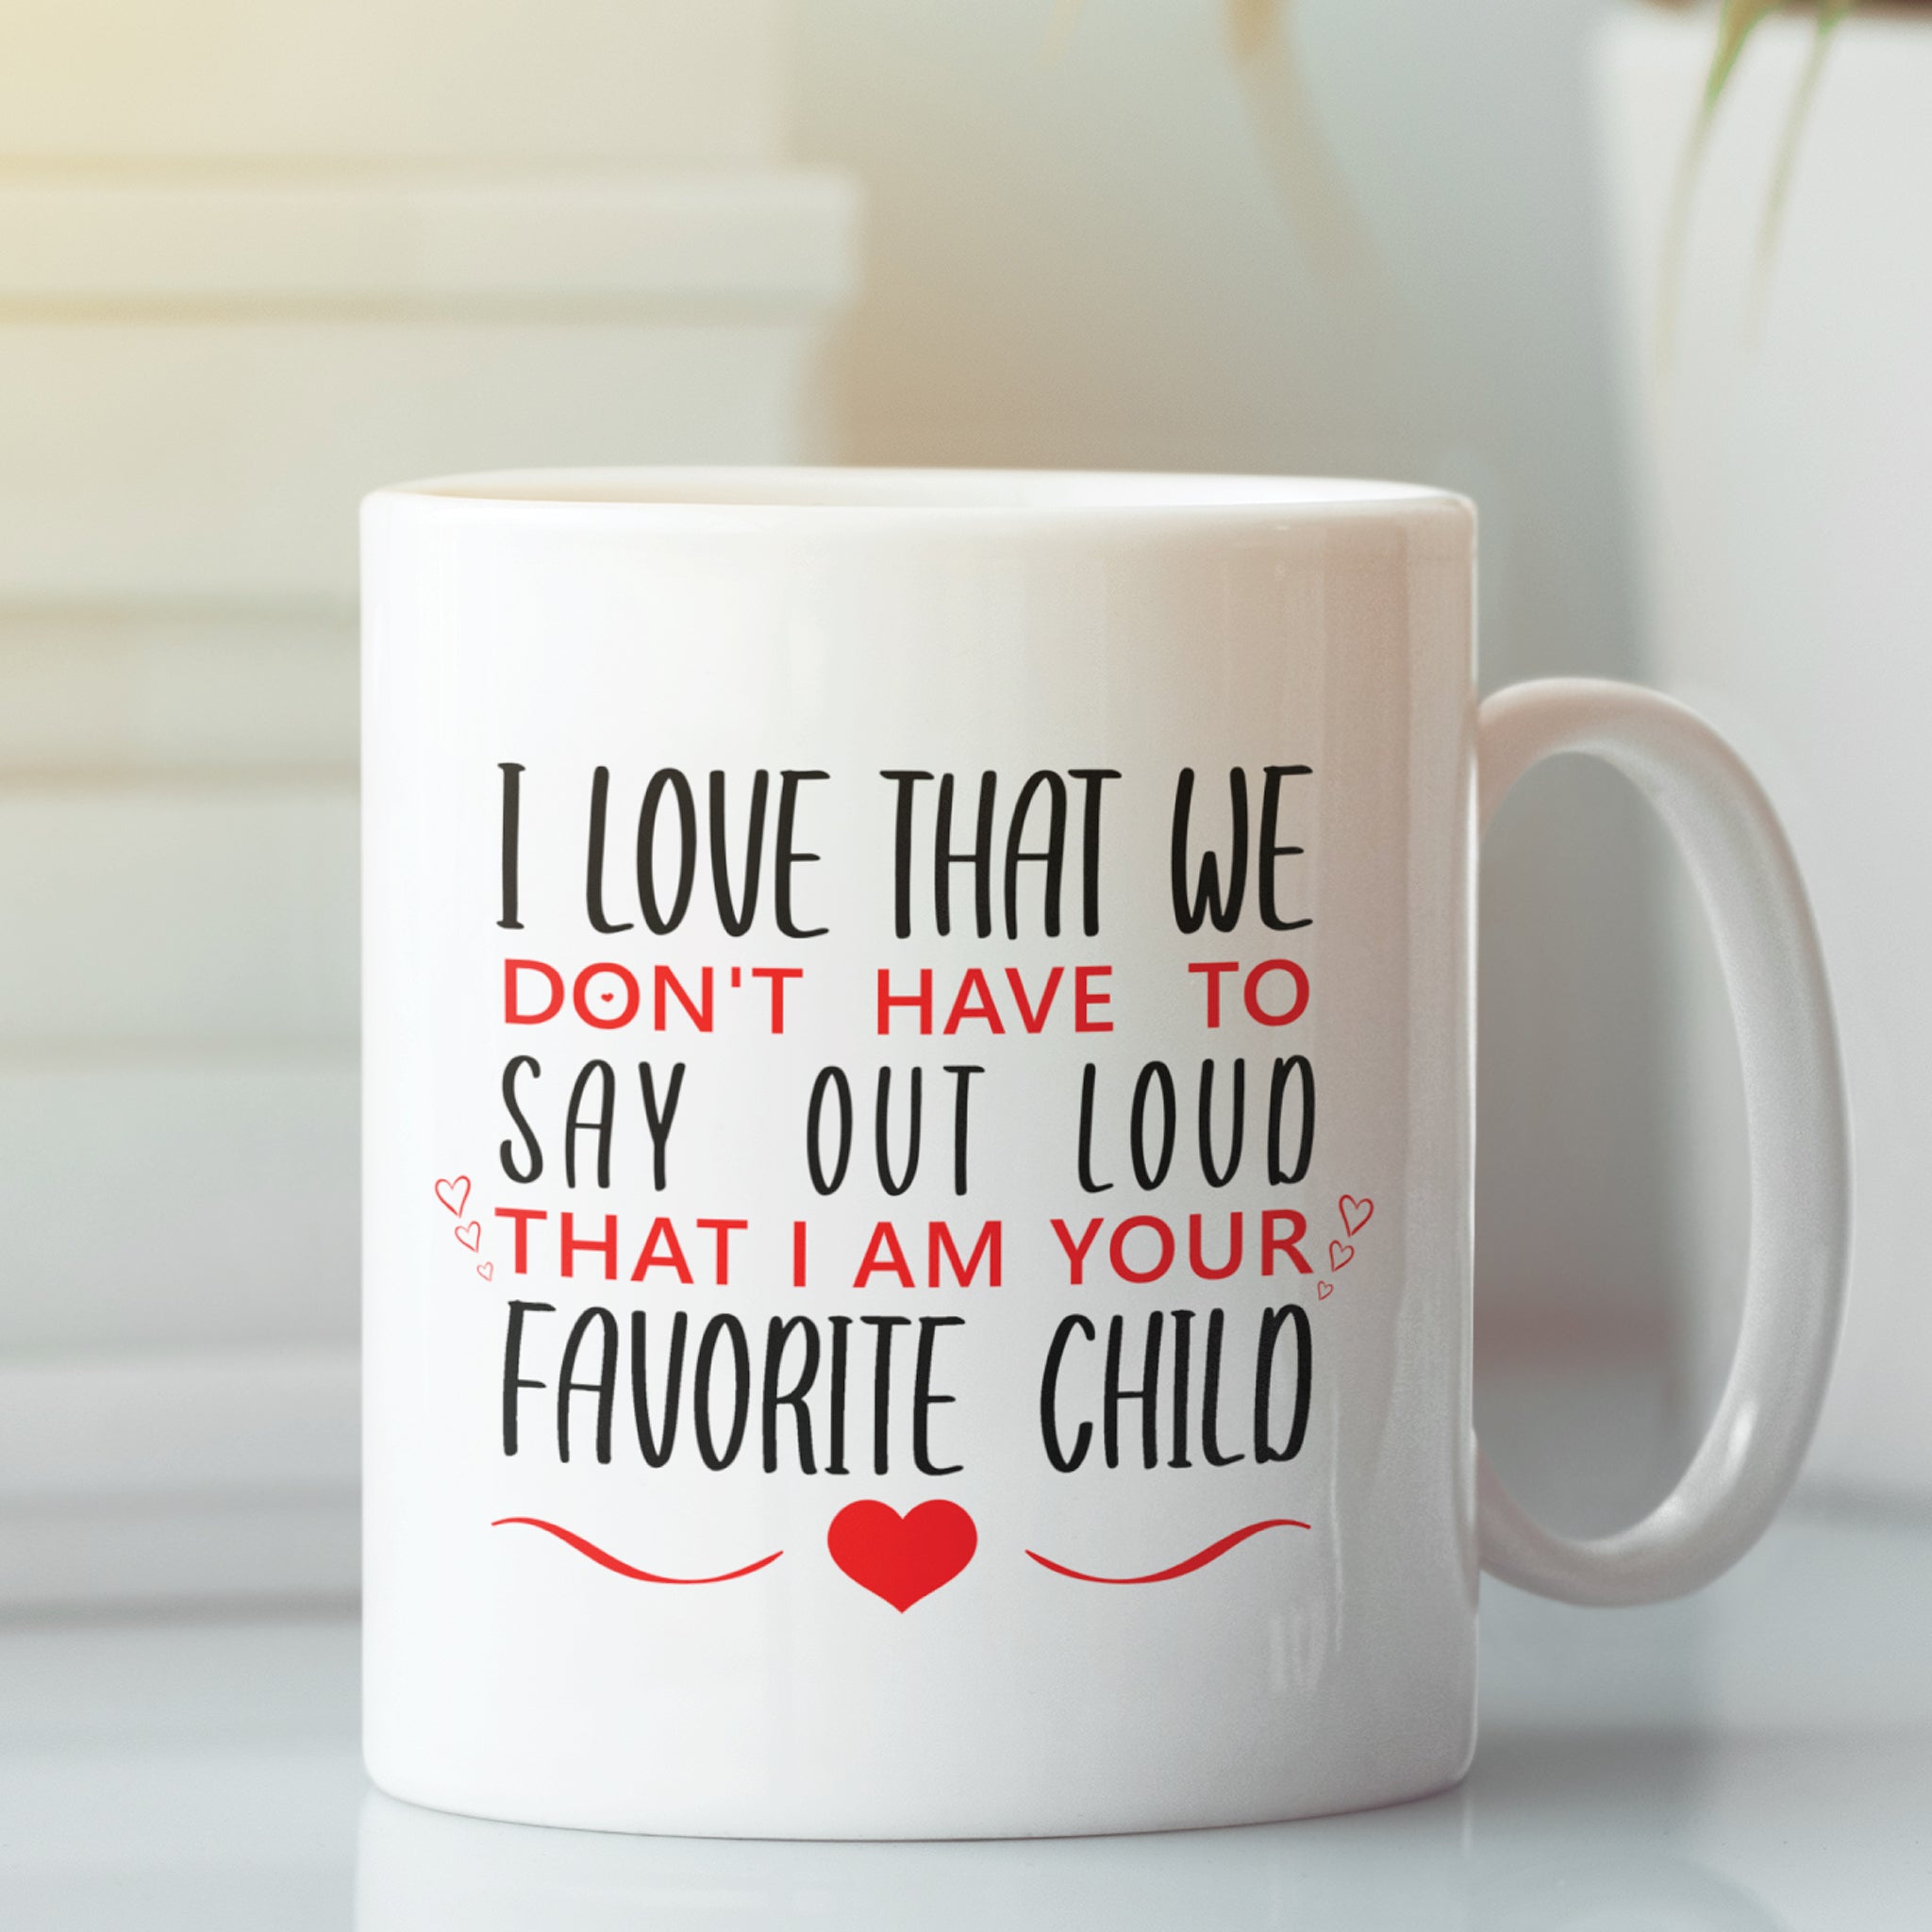 No Need To Say It - Funny Mug For Dad Or Mom